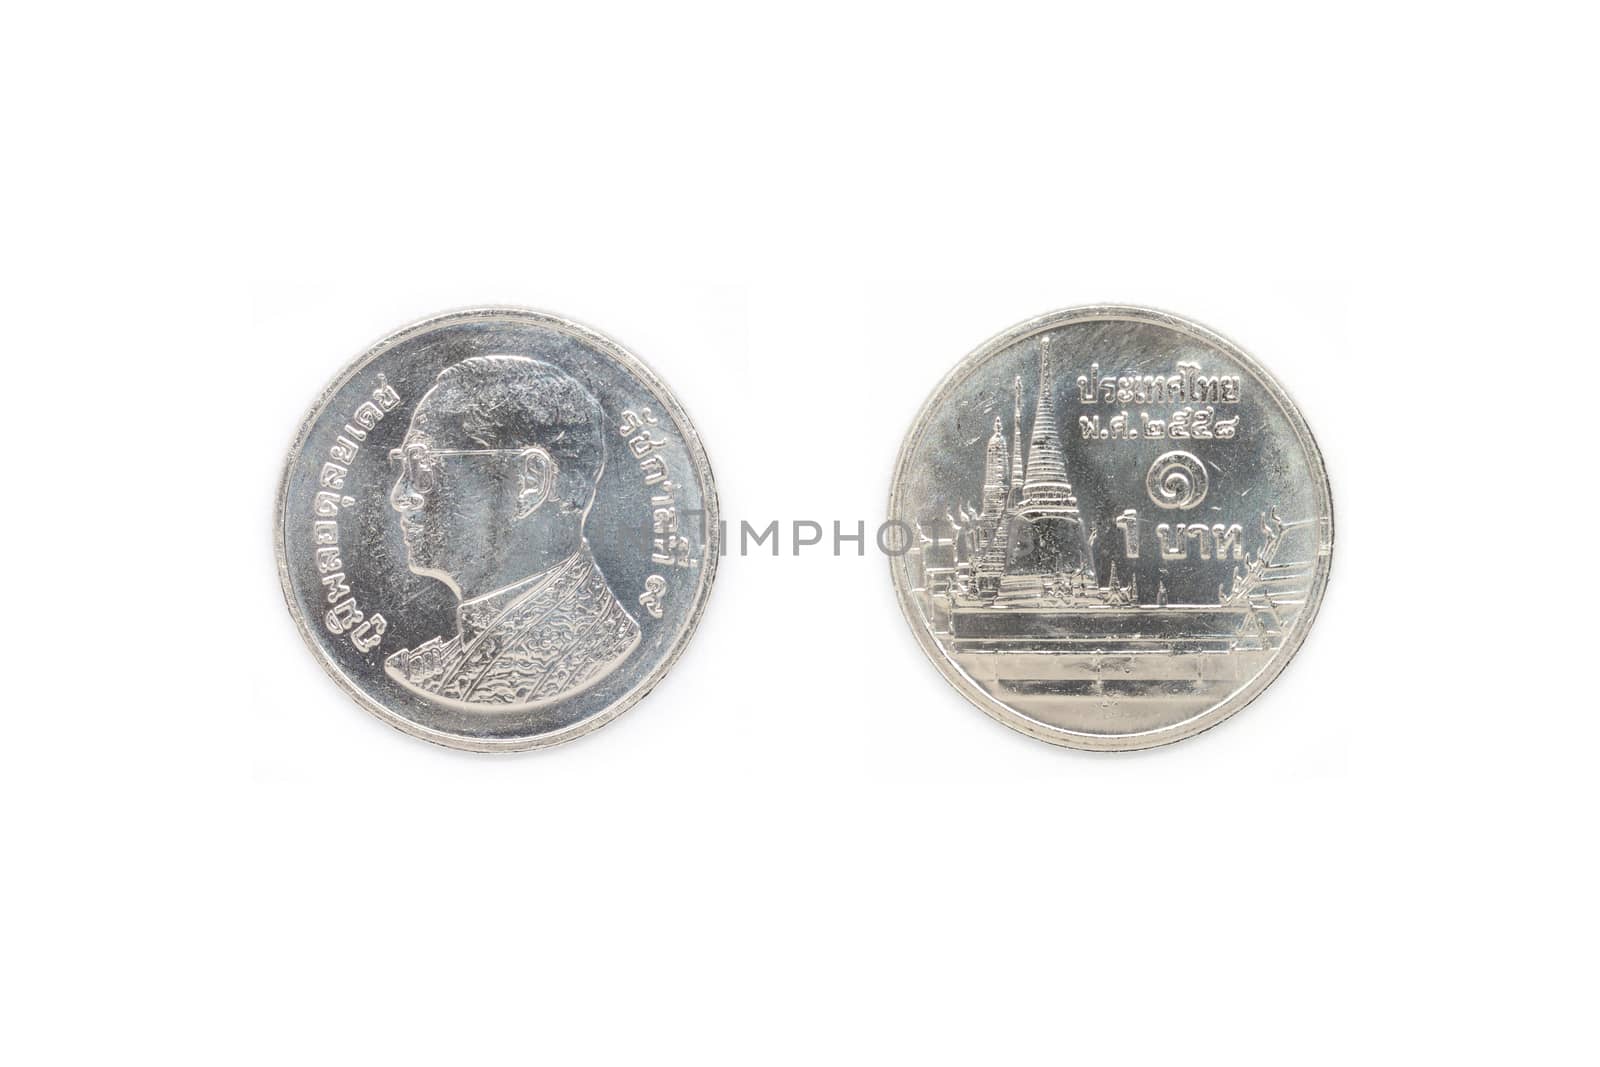 Thai coin 1 baht. by stigmatize